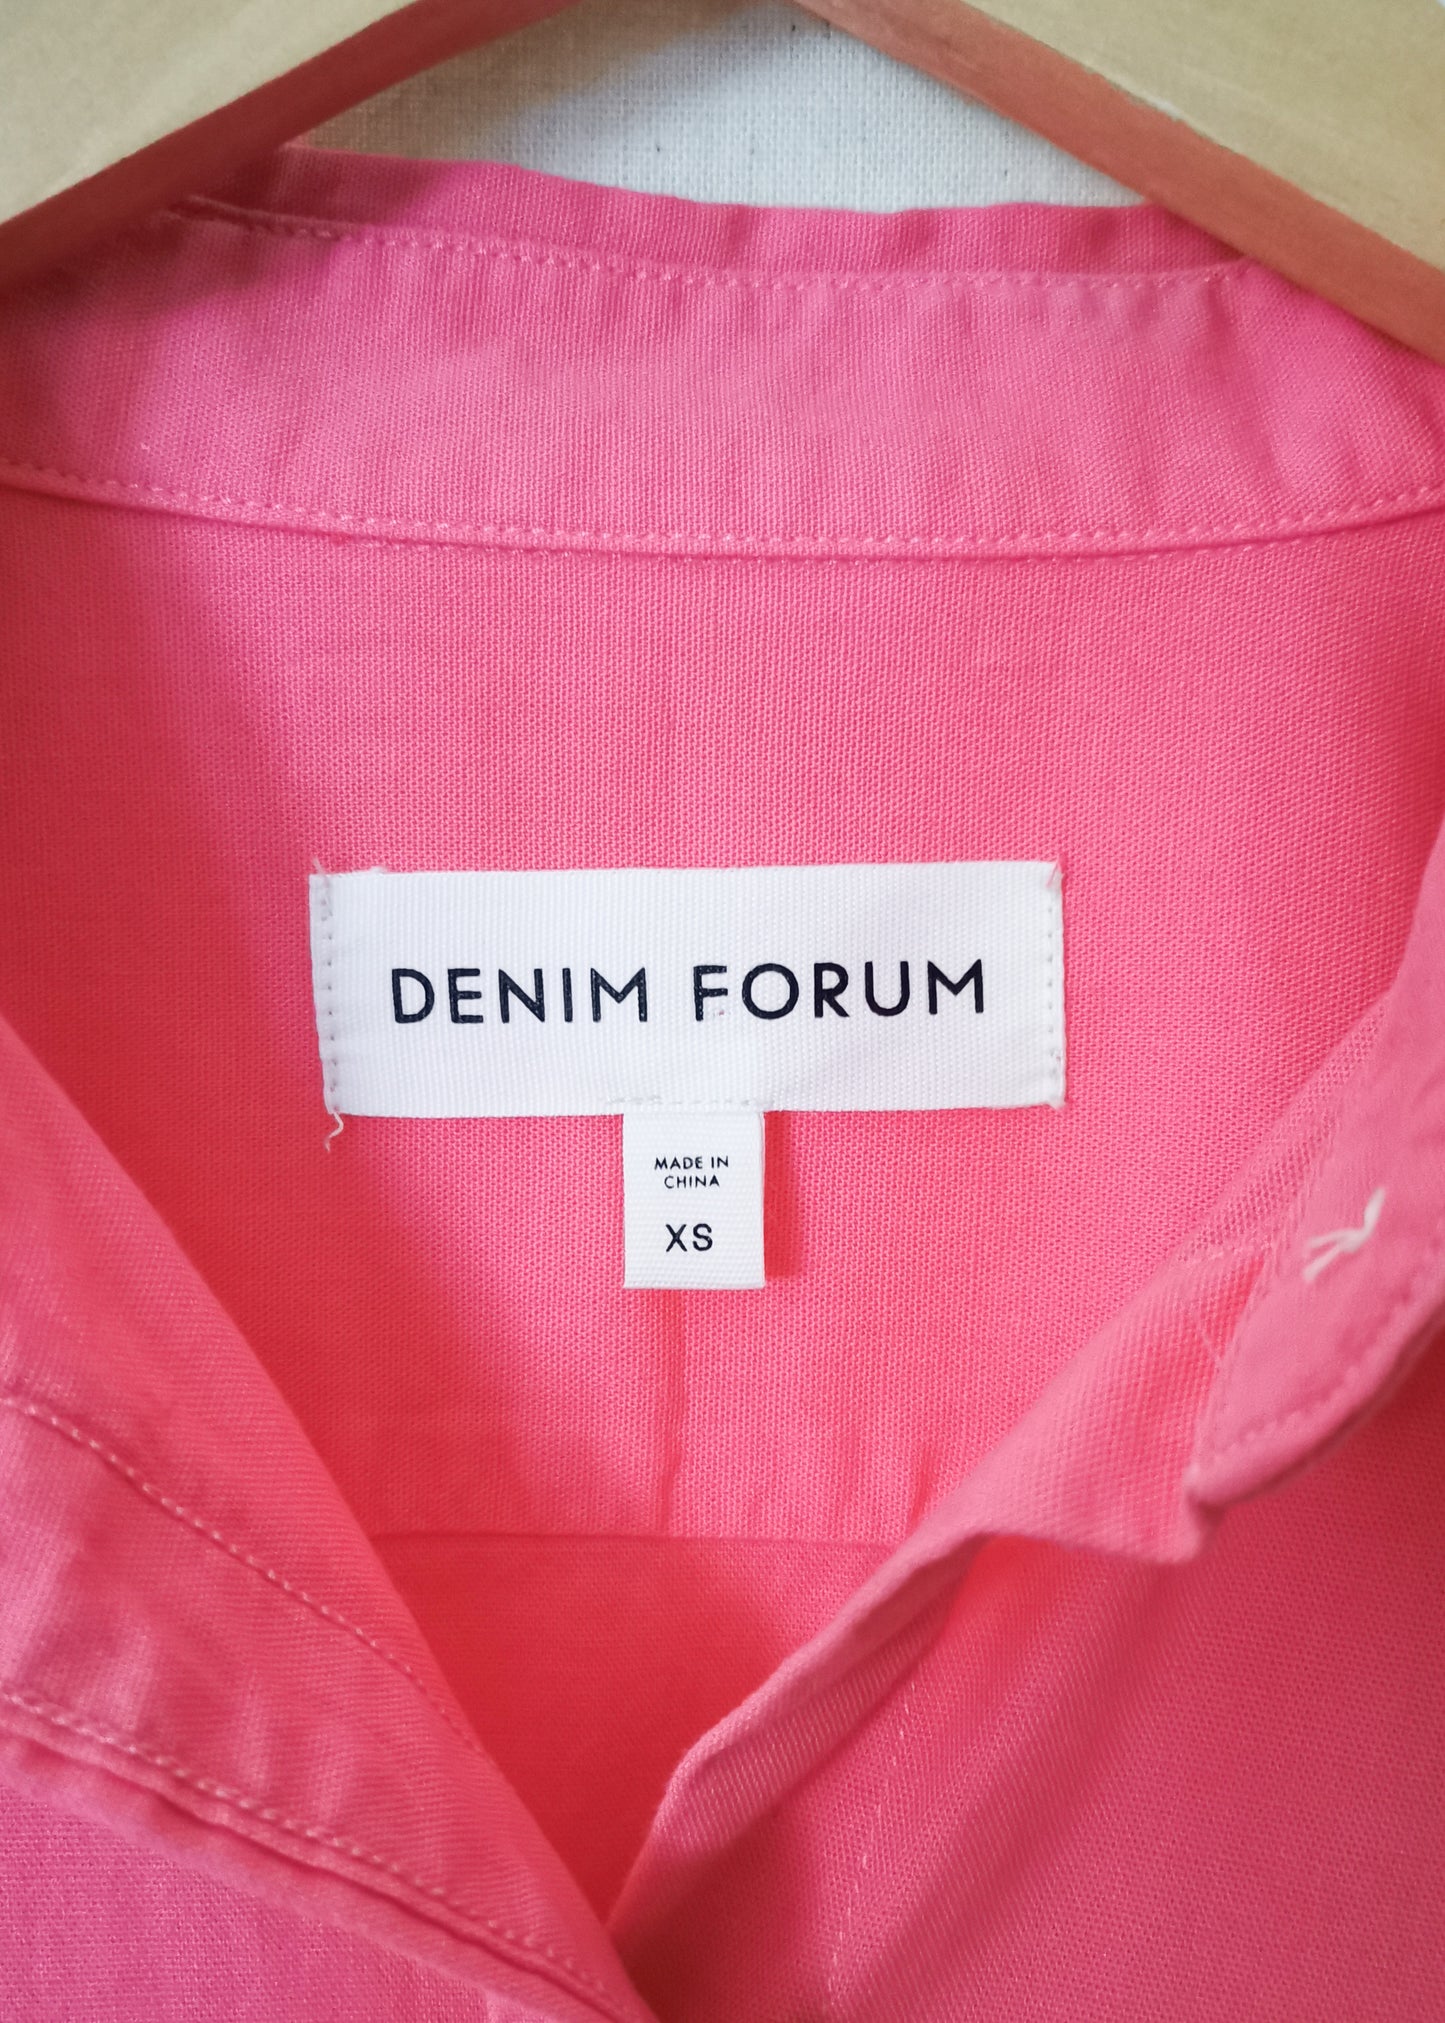 Denim Forum Cotton Top (XS)